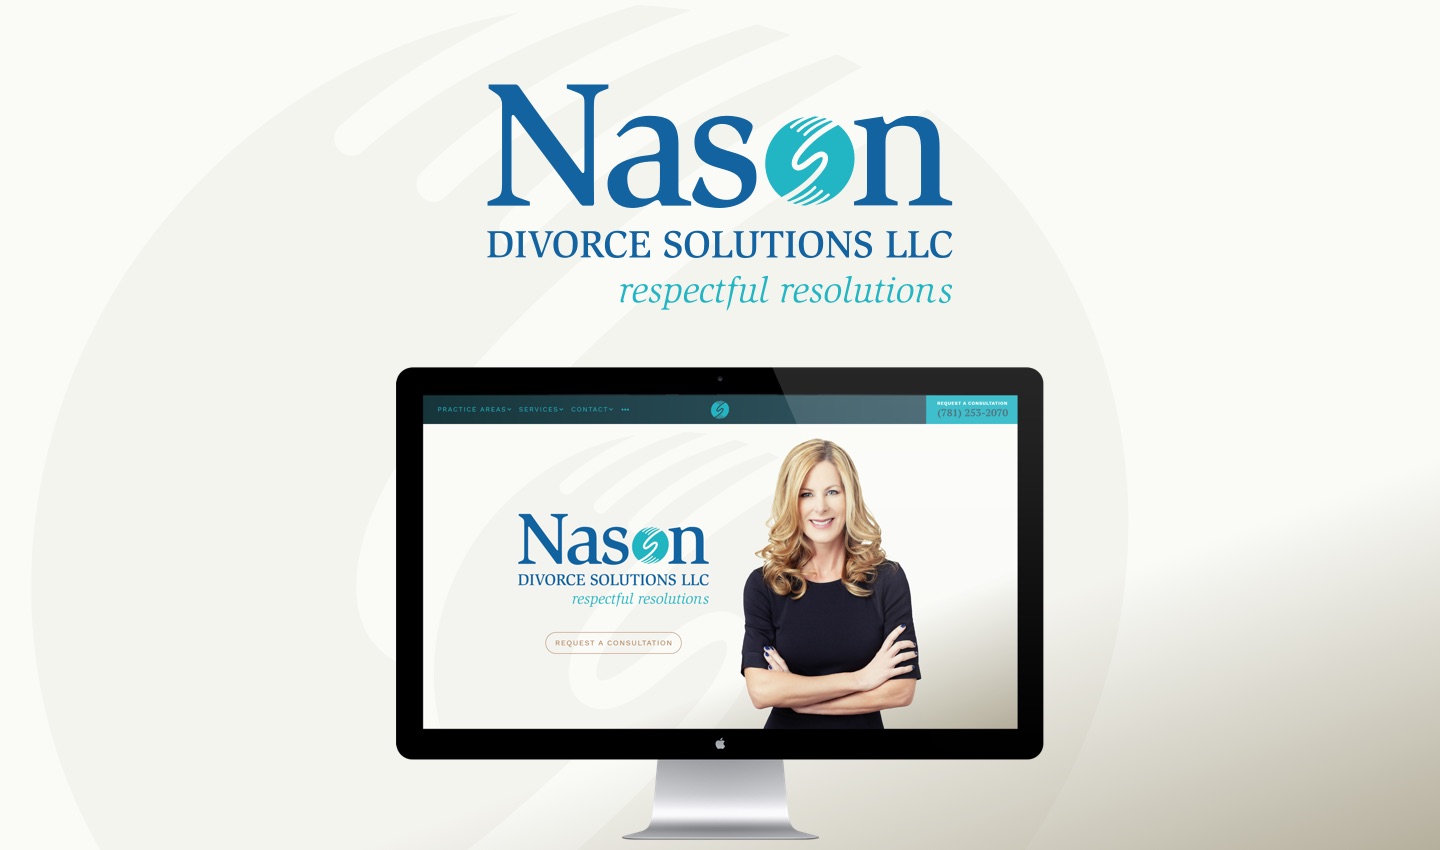 Nason Divorce Solutions